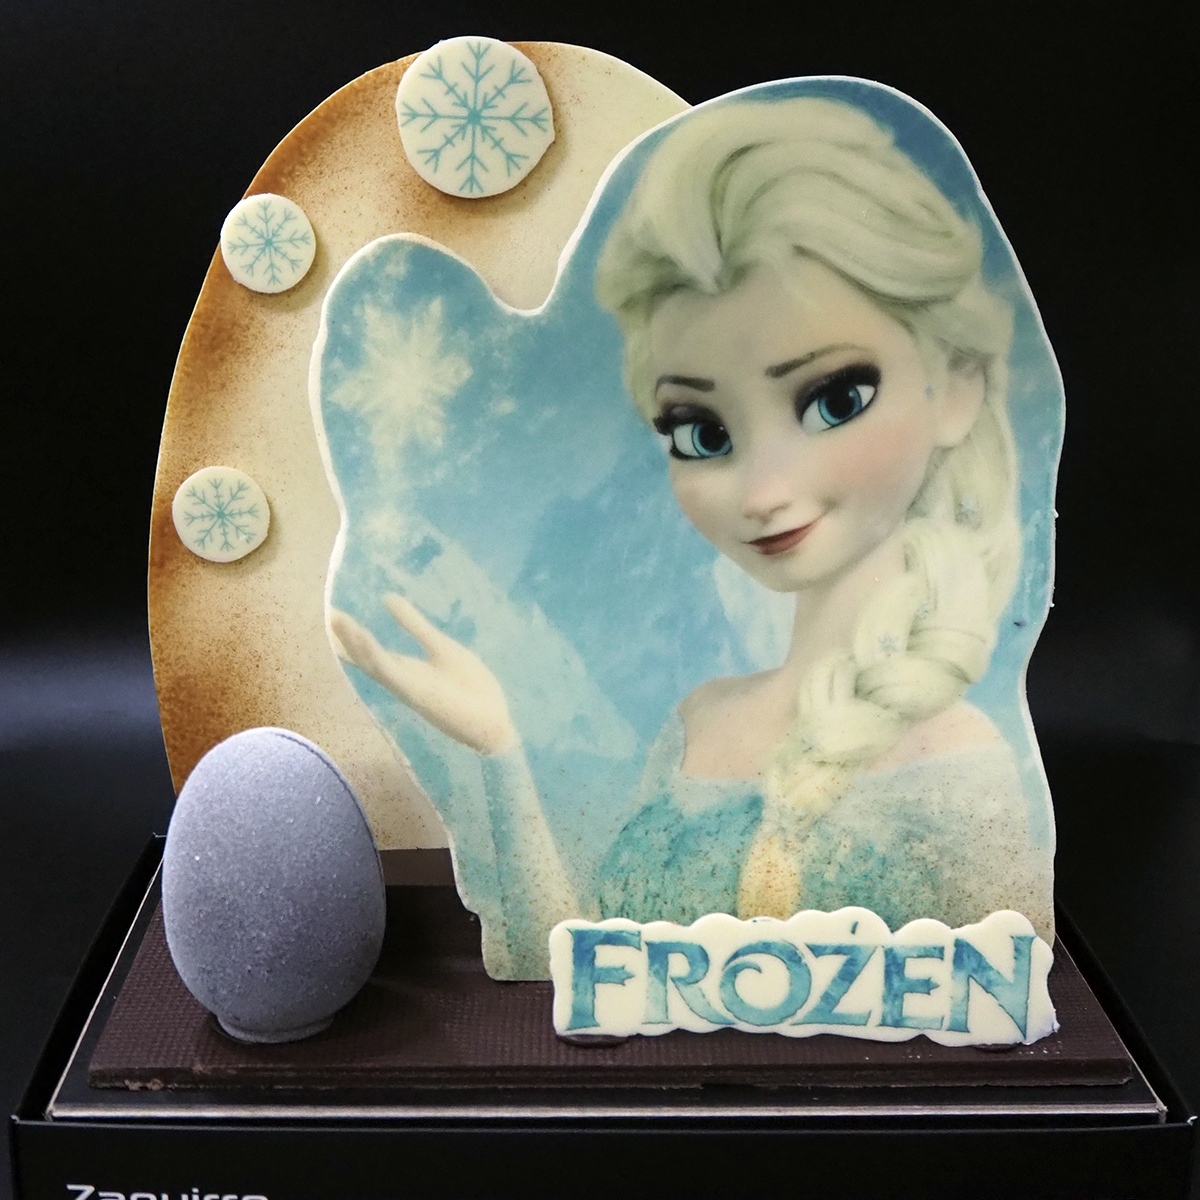 Mona de Pasqua artesanal elaborada per Zaguirre Pastisser amb la figura de Frozen